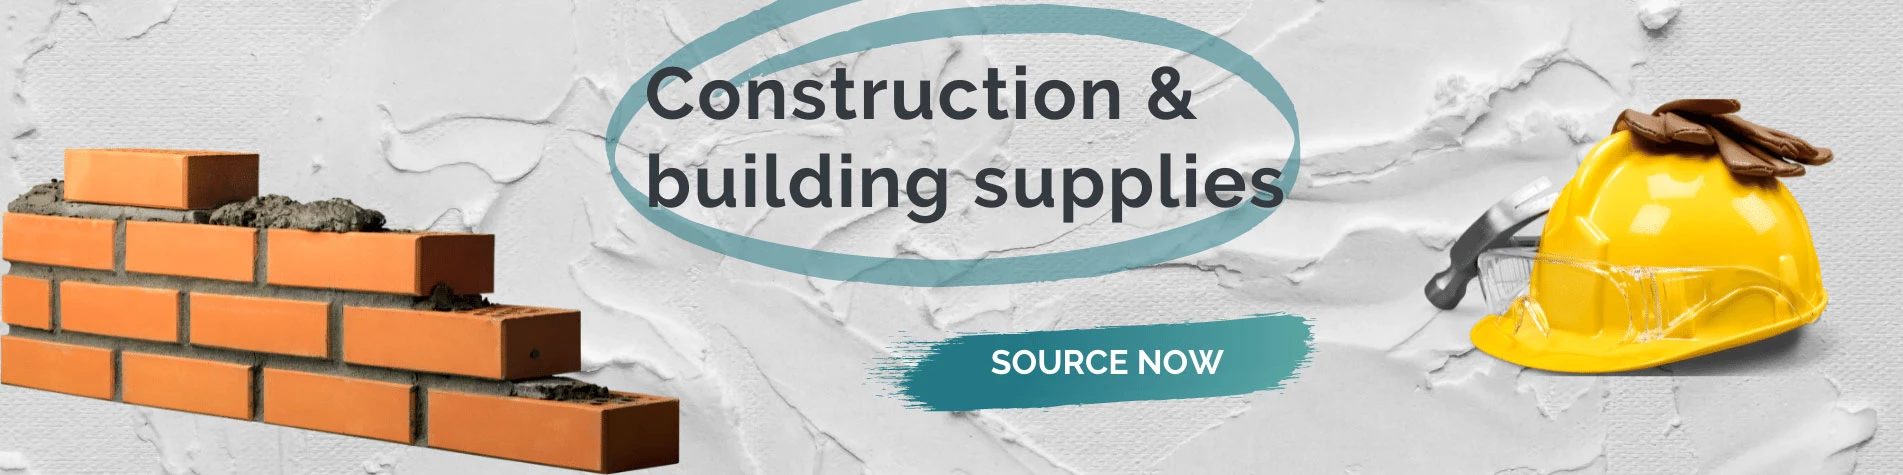 danagi-construction-building-supplies-marketplace